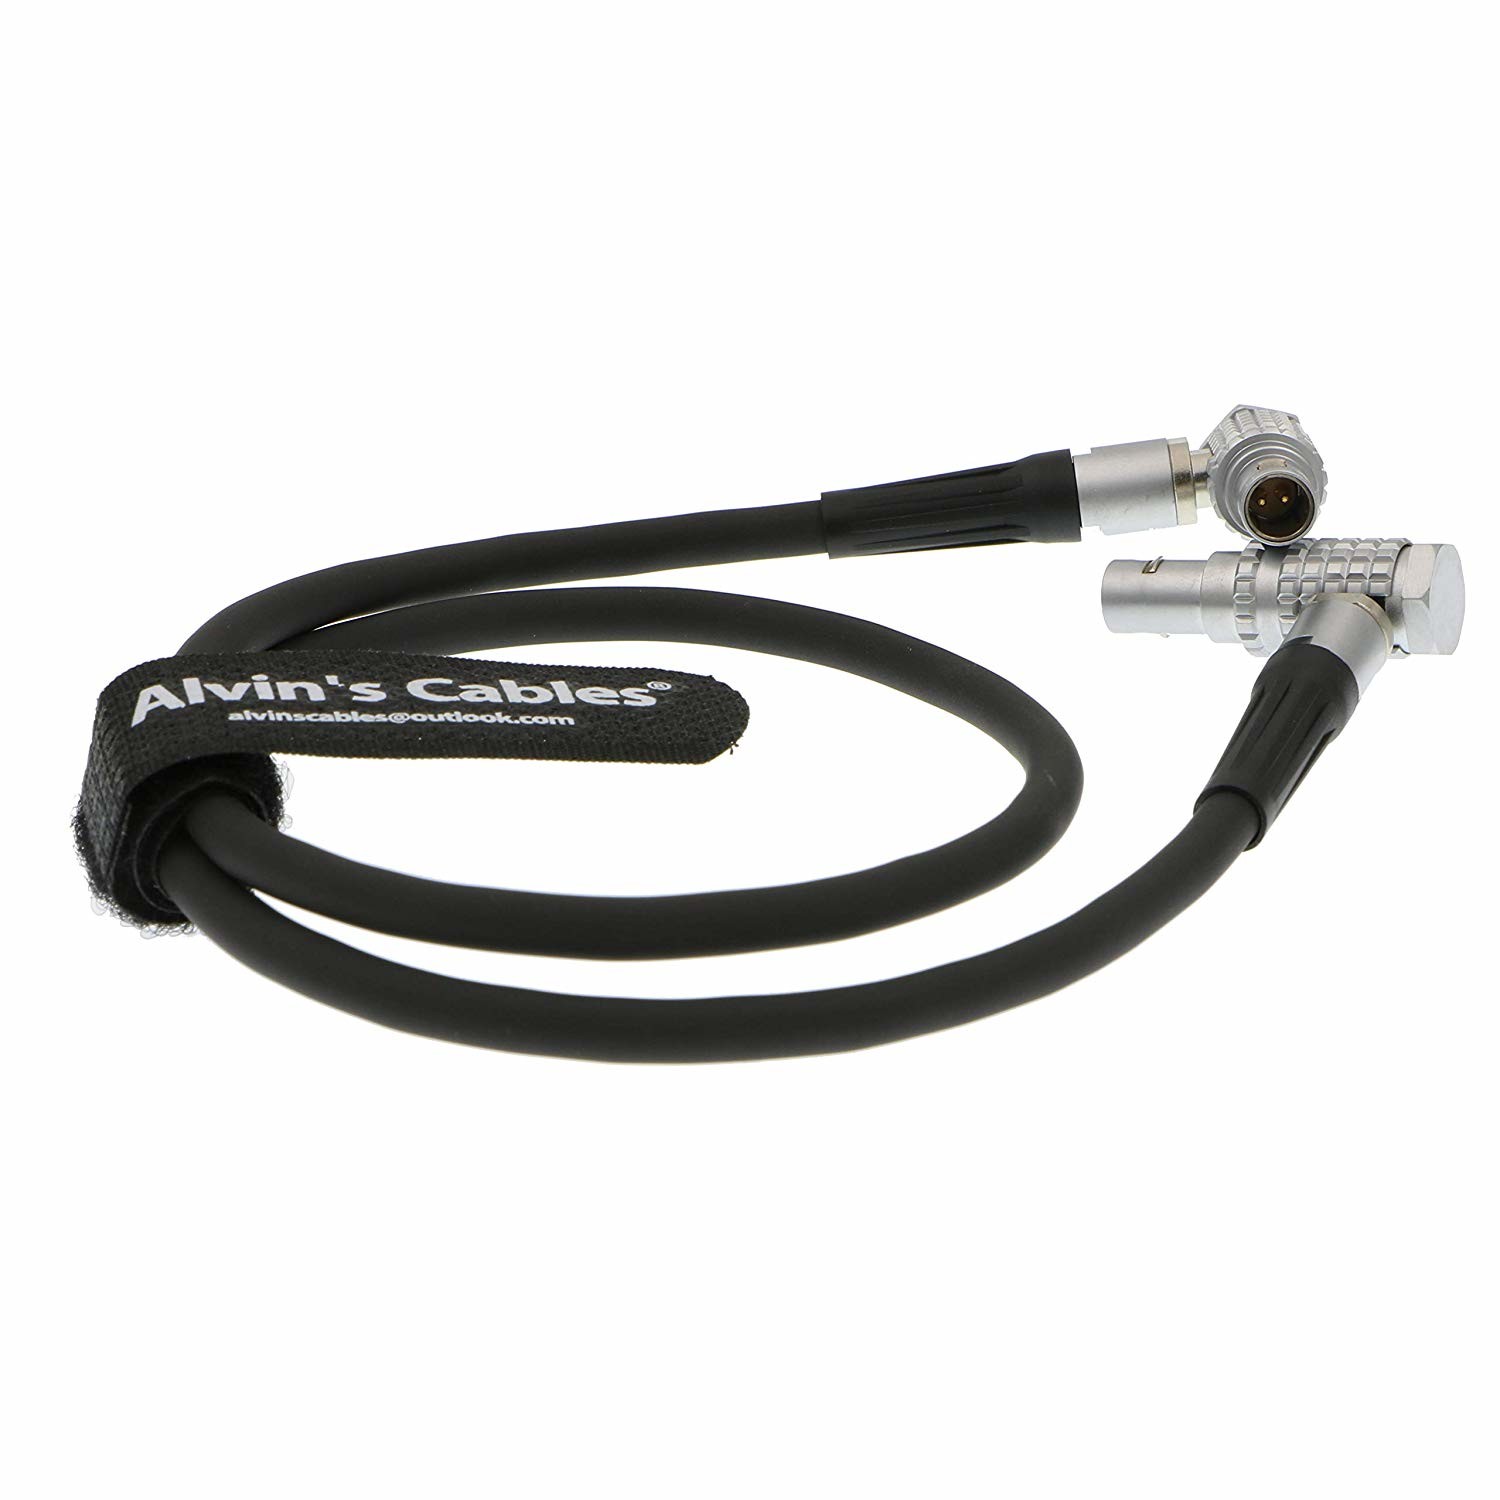 Alvin's Cables Teradek Bond ARRI Alexa Camera Power Cable 2 Pin Male